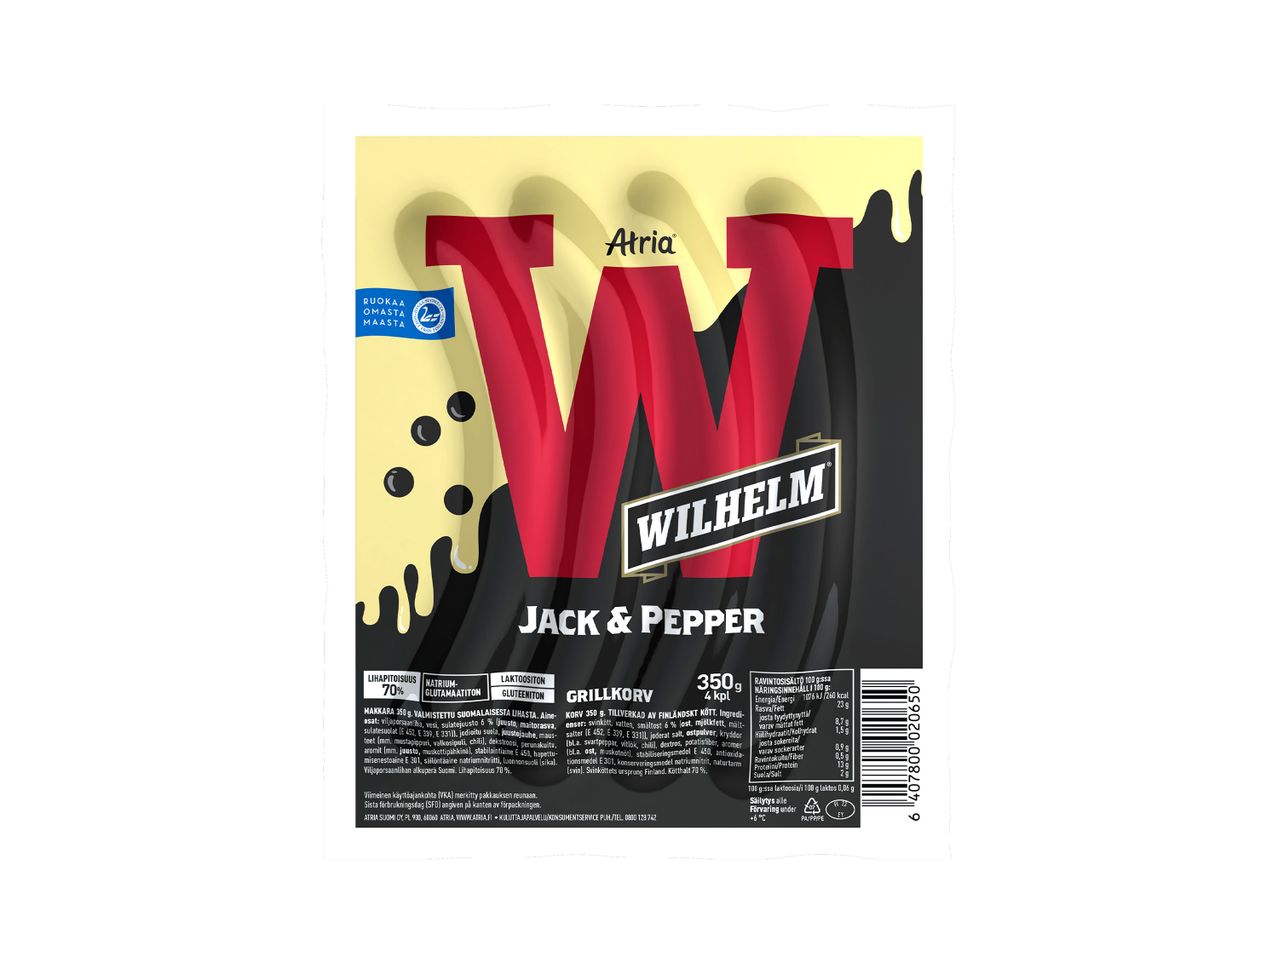 Mene koko näytön tilaan: Atria Wilhelm Jack & Pepper - Kuva 1